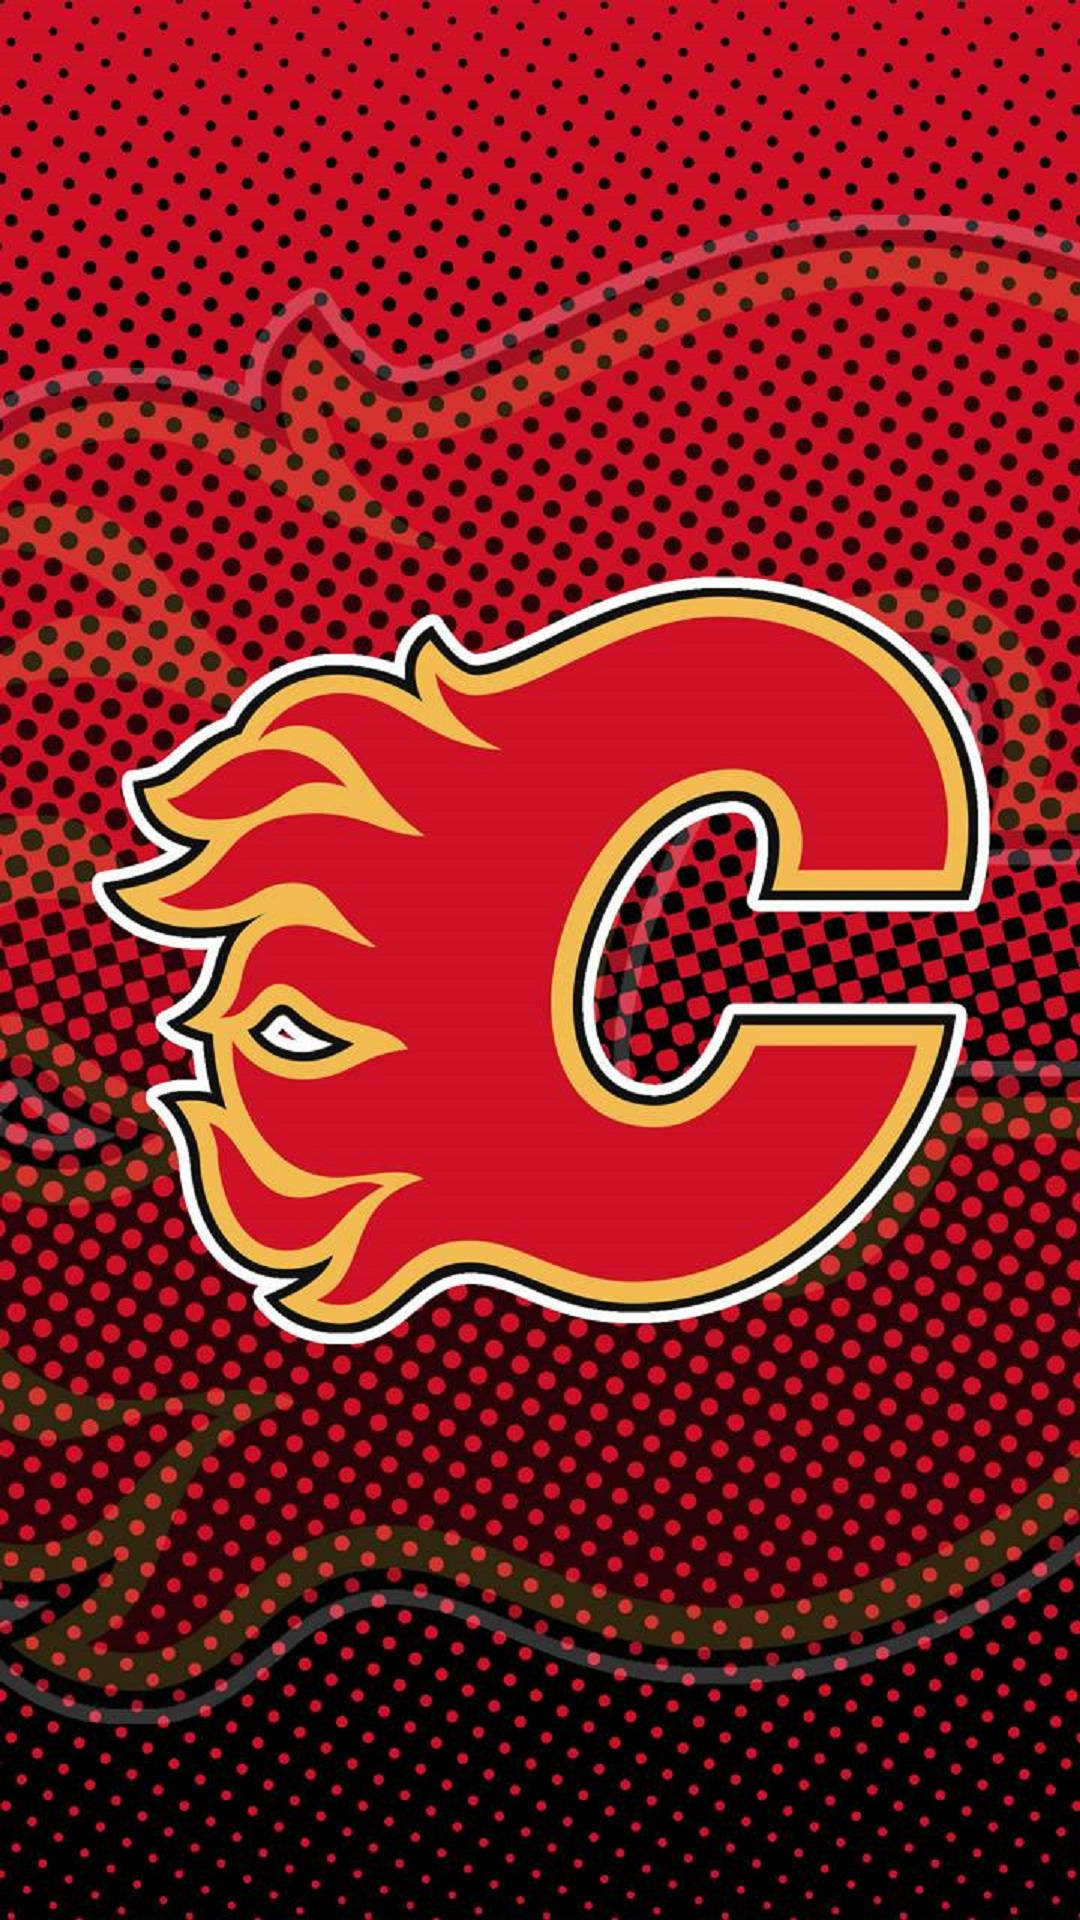 Logo Calgary Flames Punteggiato Rosso E Nero Sfondo